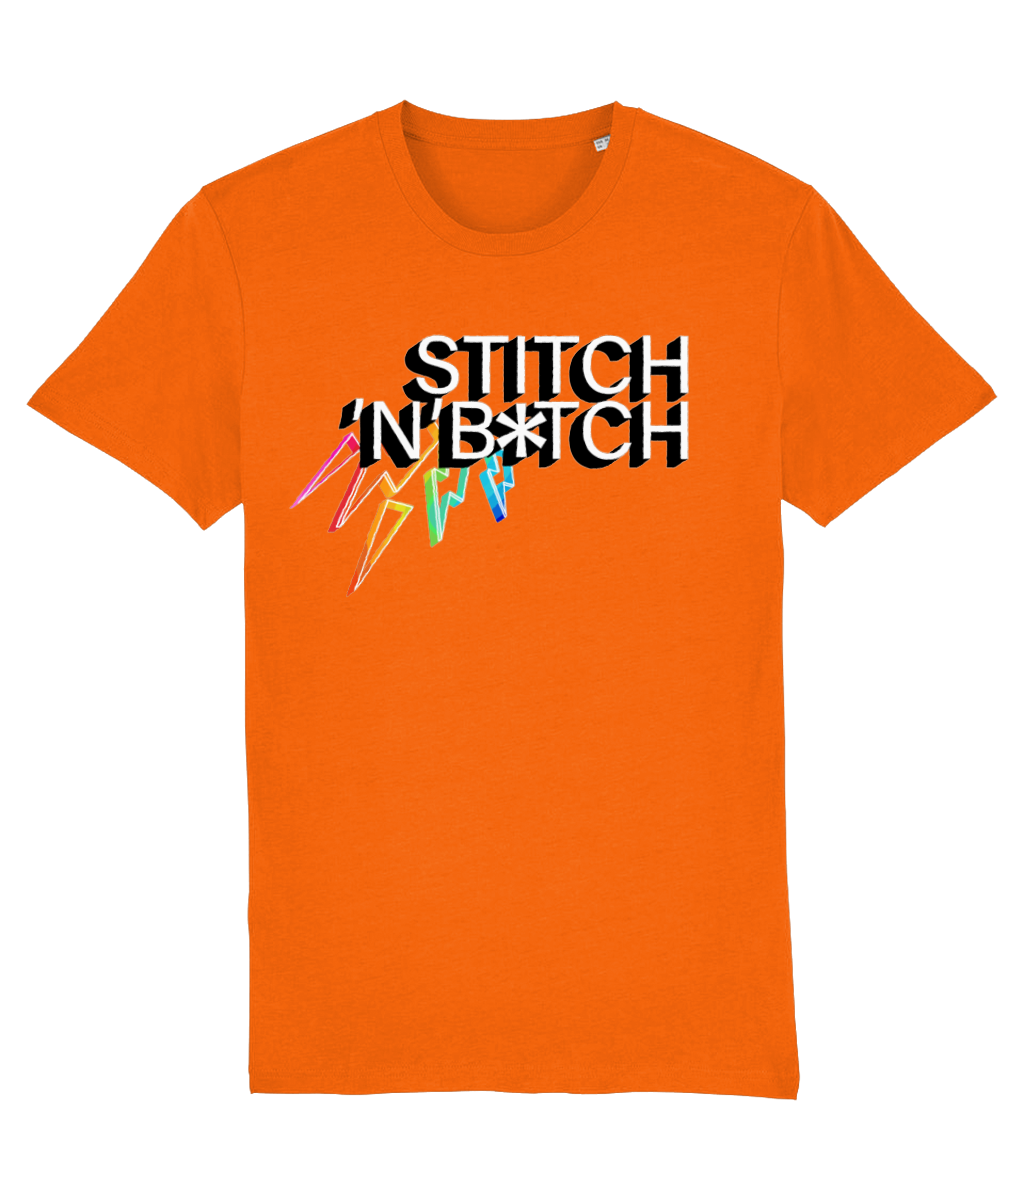 Stitch ‘n’ Bitch